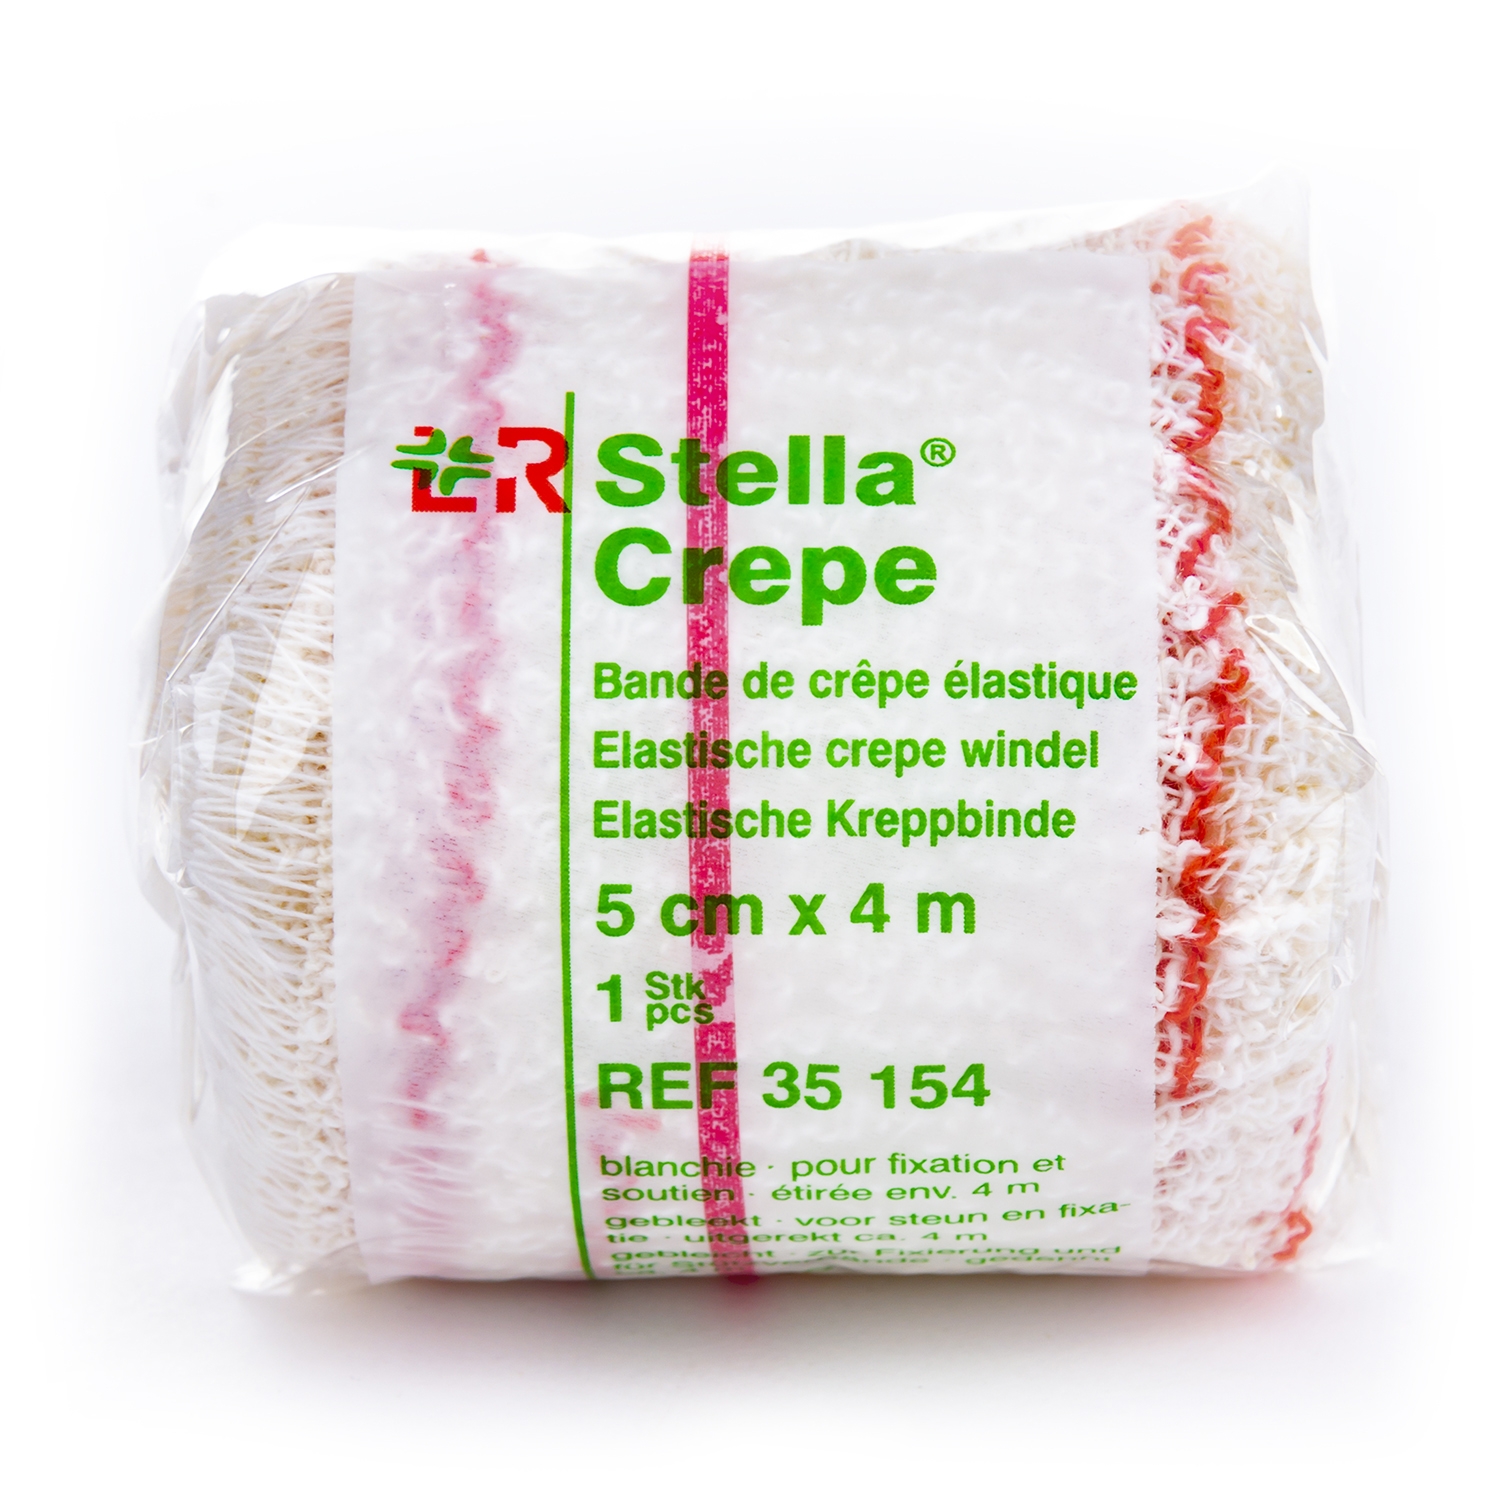 Stella crepe emballage individuel - 5 cm x 4 m (20 pcs)